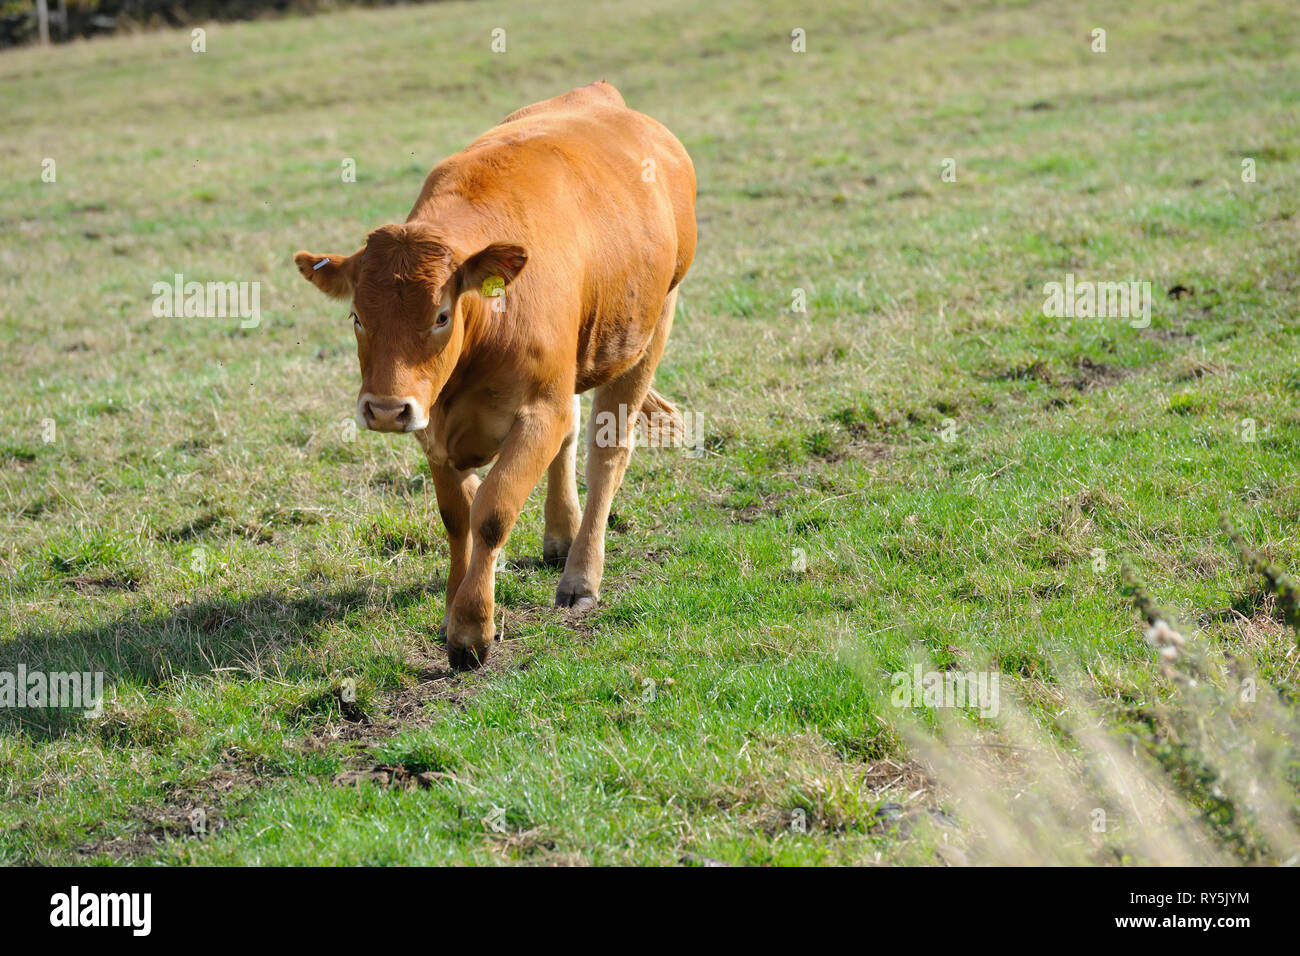 Jersey calf walking across a field Stock Photo